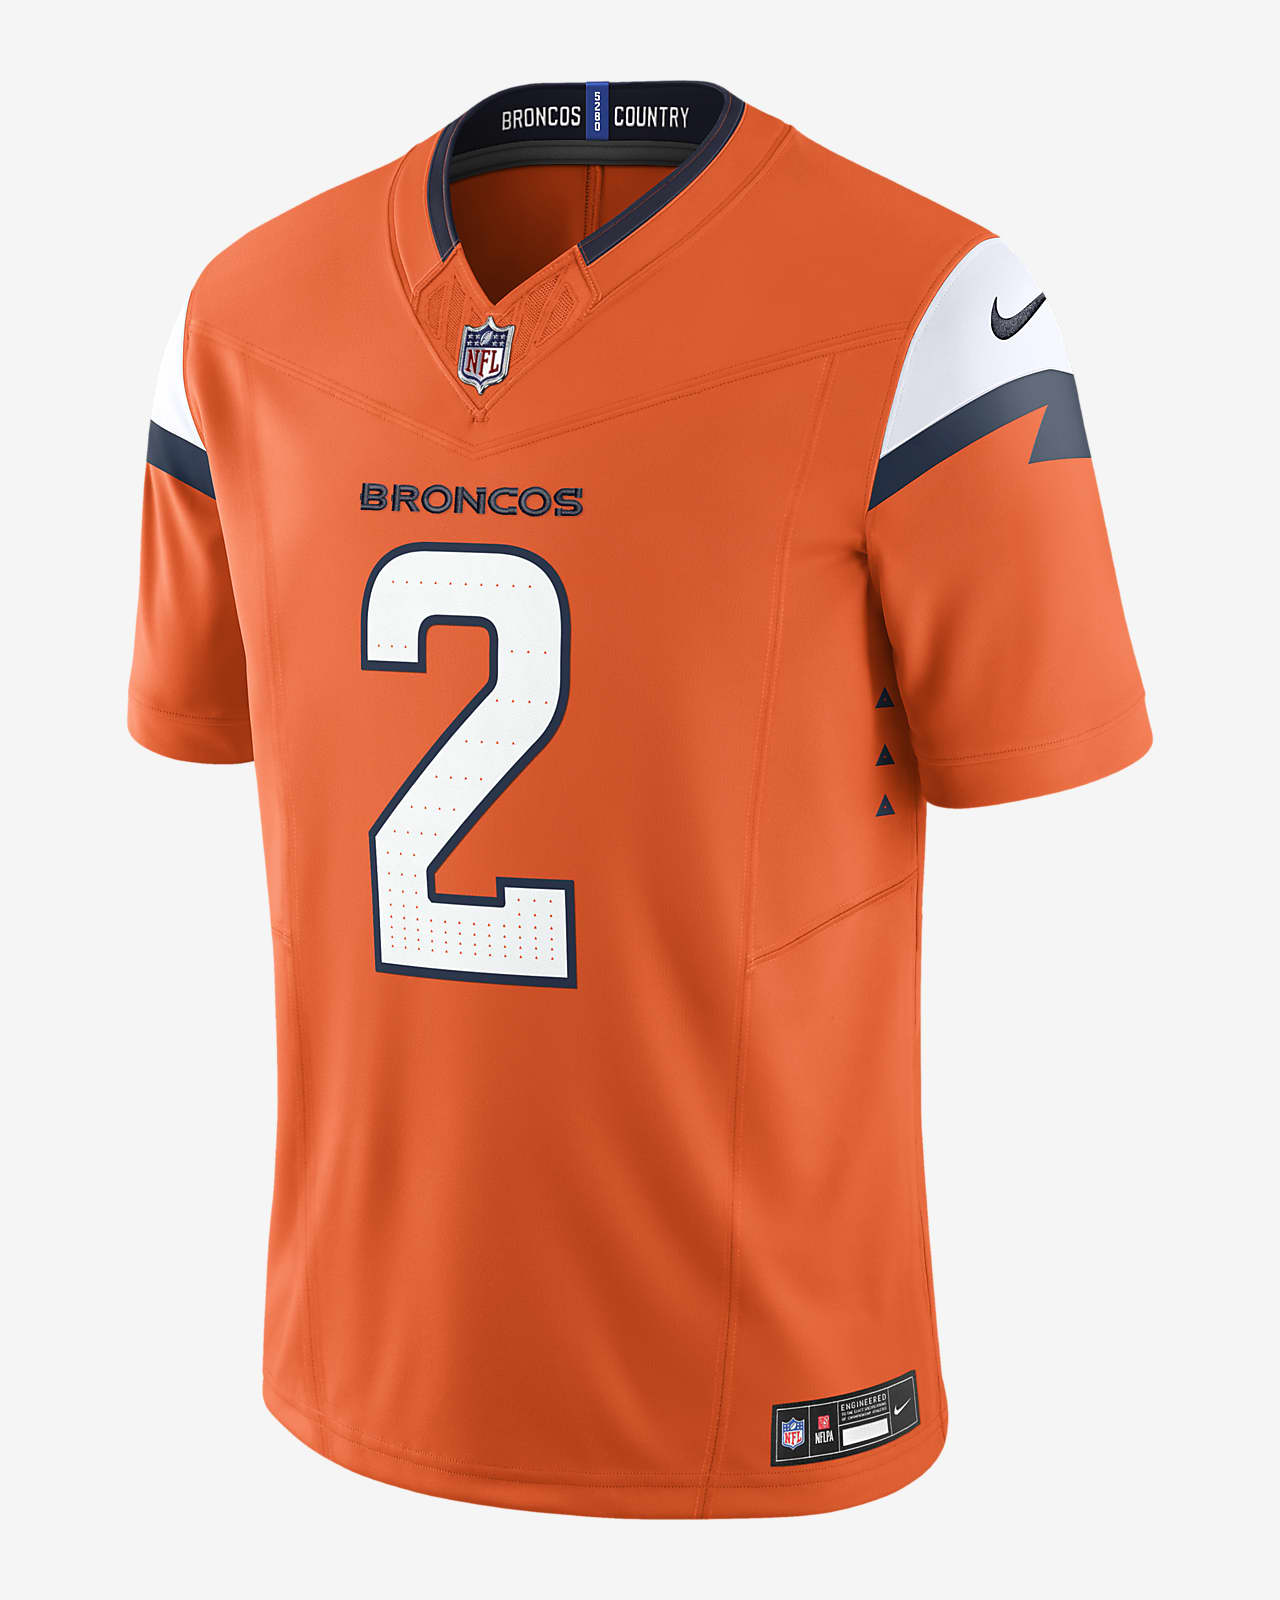 Patrick Surtain II Denver Broncos Men's Nike Dri-FIT NFL Limited Football Jersey